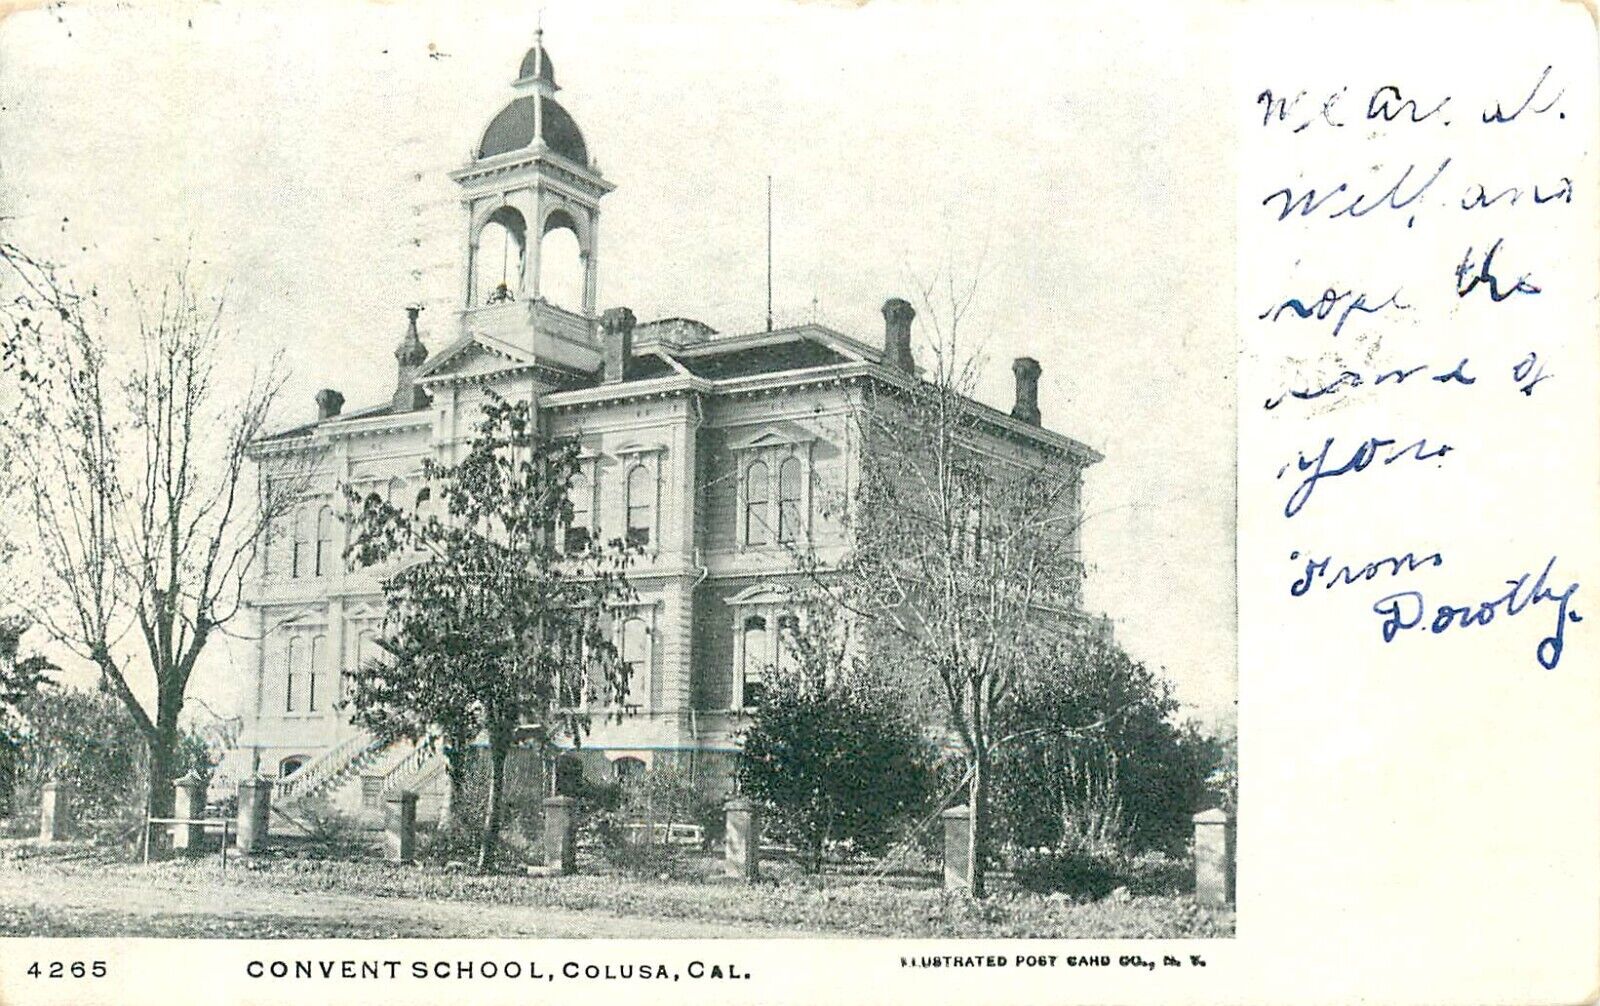 CONVENT SCHOOL, 1907, COLUSA, CALIFORNIA, VINTAGE POSTCARD (SB 81)